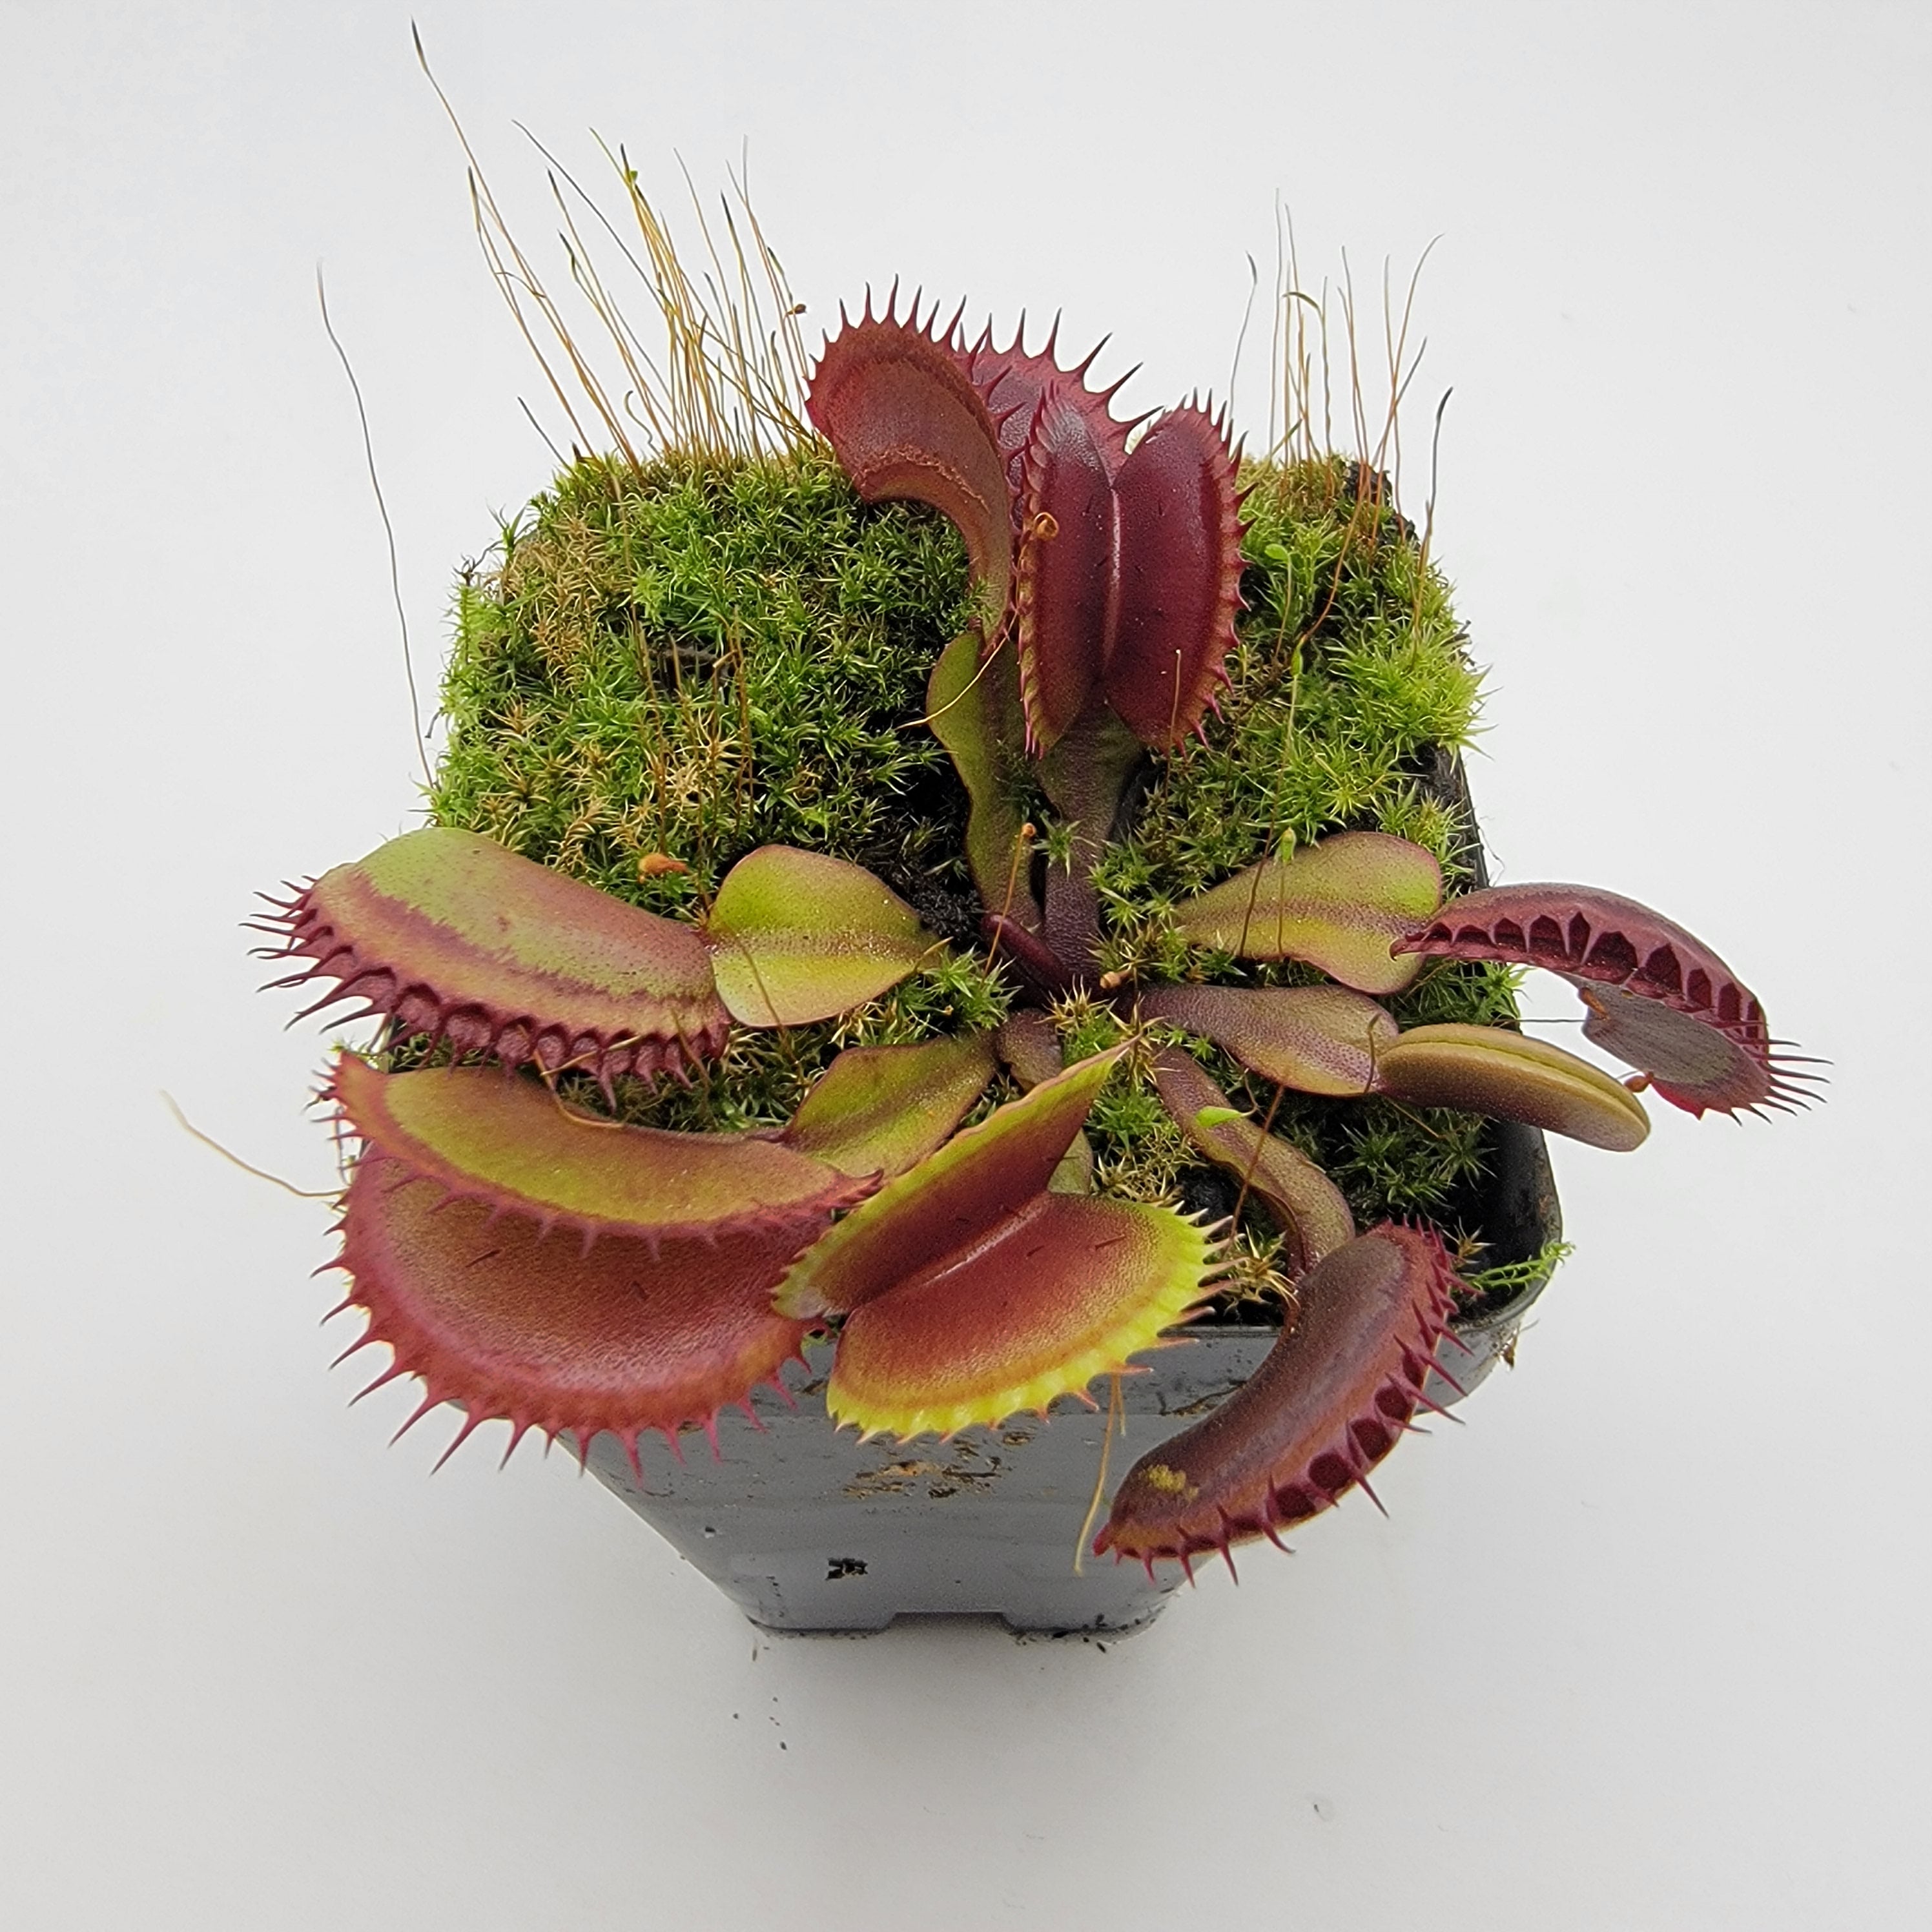 Venus flytrap (Dionaea muscipula) FTS 'Archangel' - Rainbow Carnivorous Plants LLC